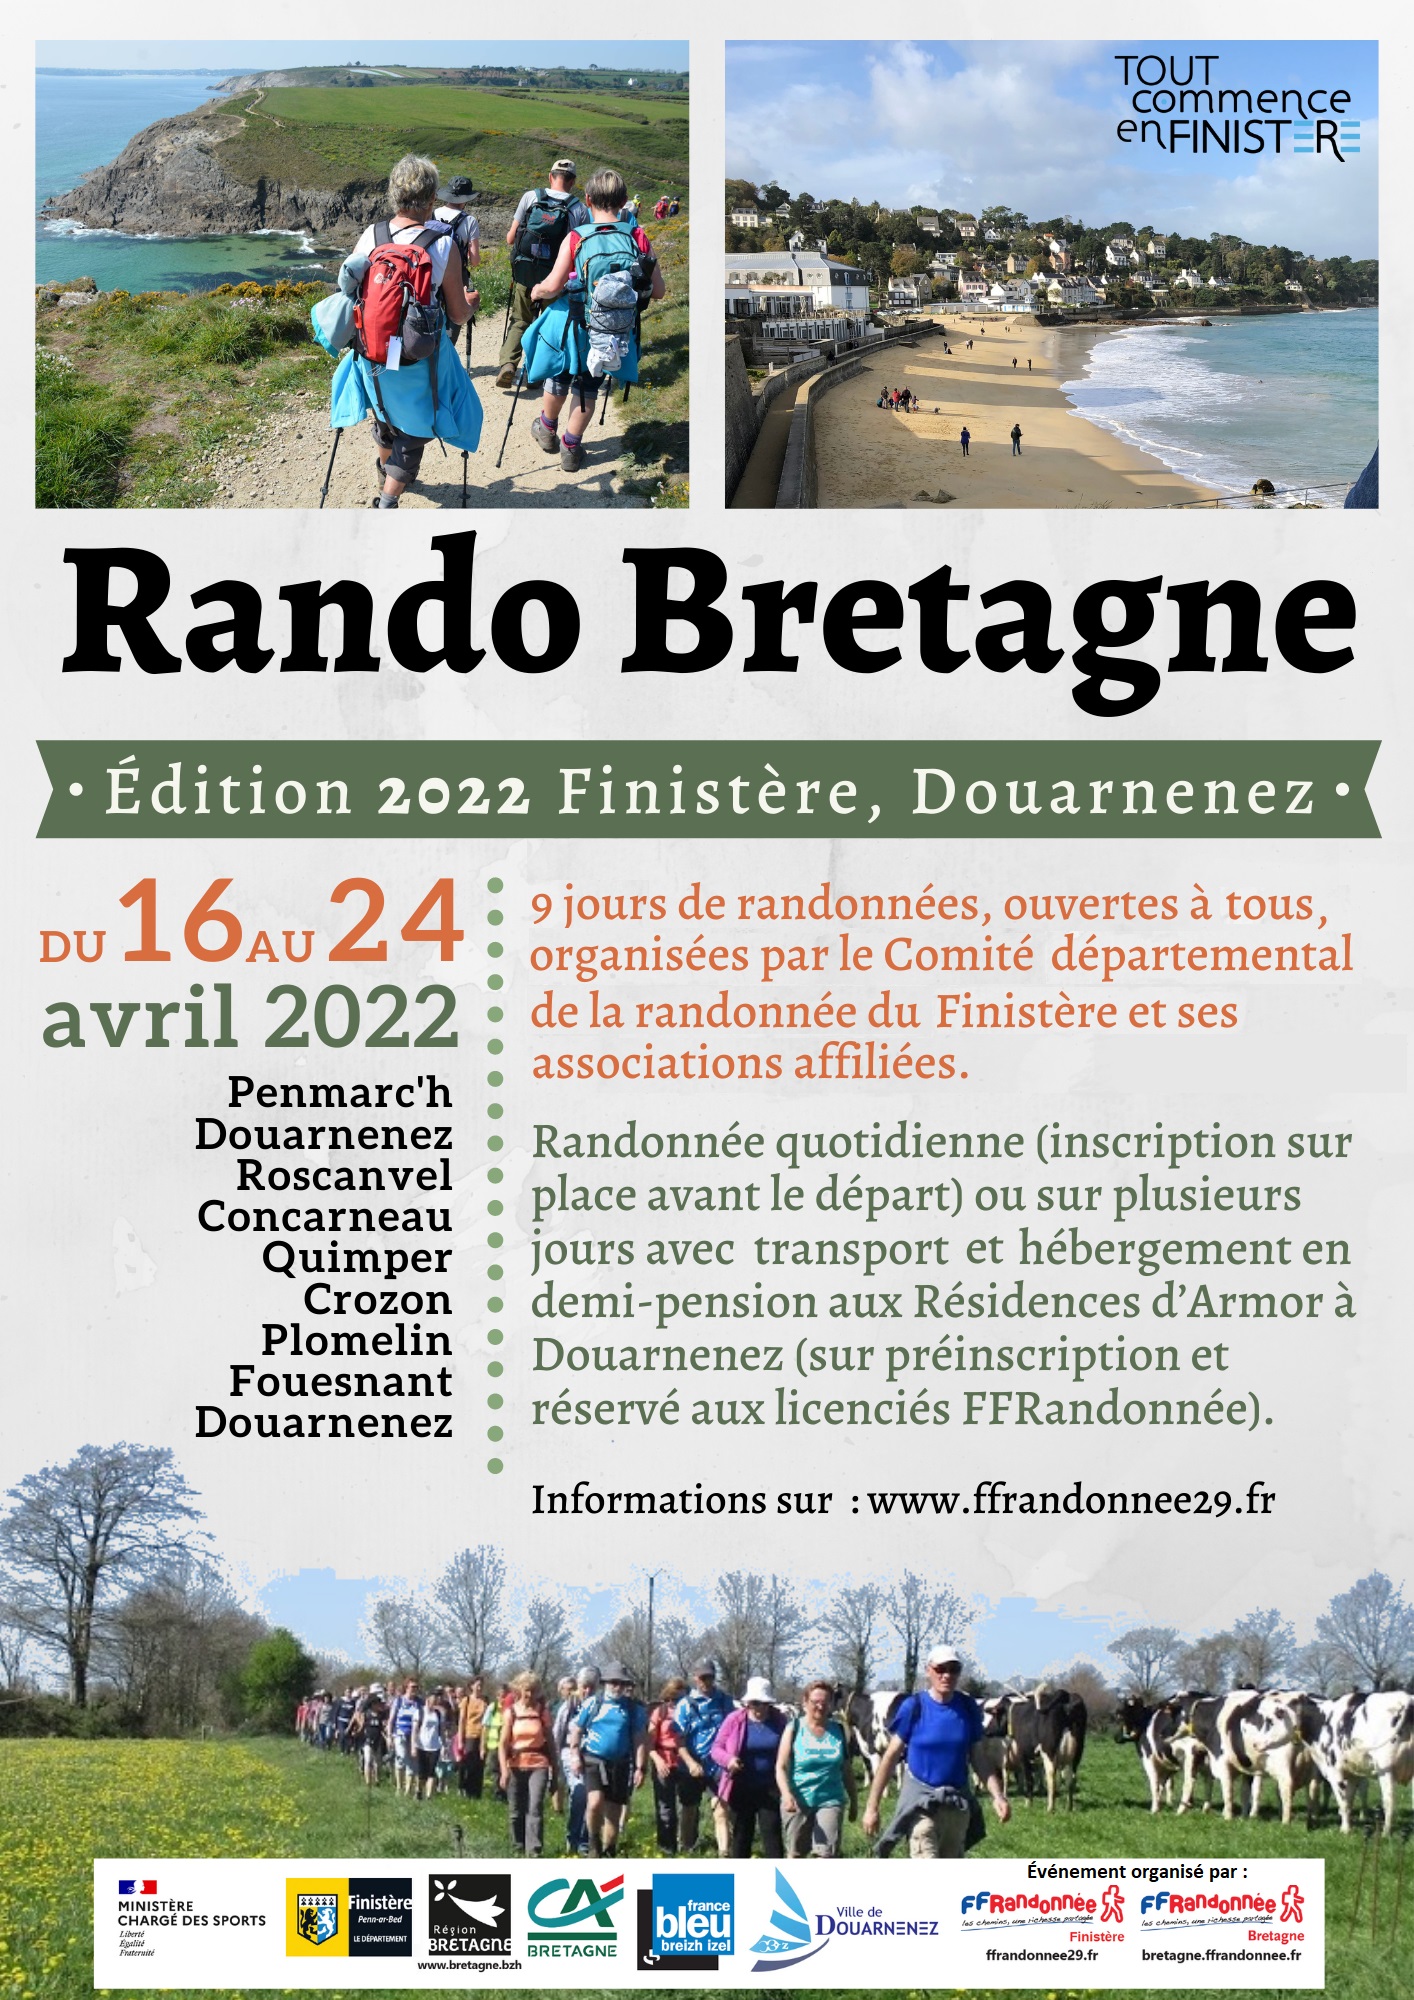 Rando Bretagne 2022 - Finistère - Douarnenez - Fédération Française de ...